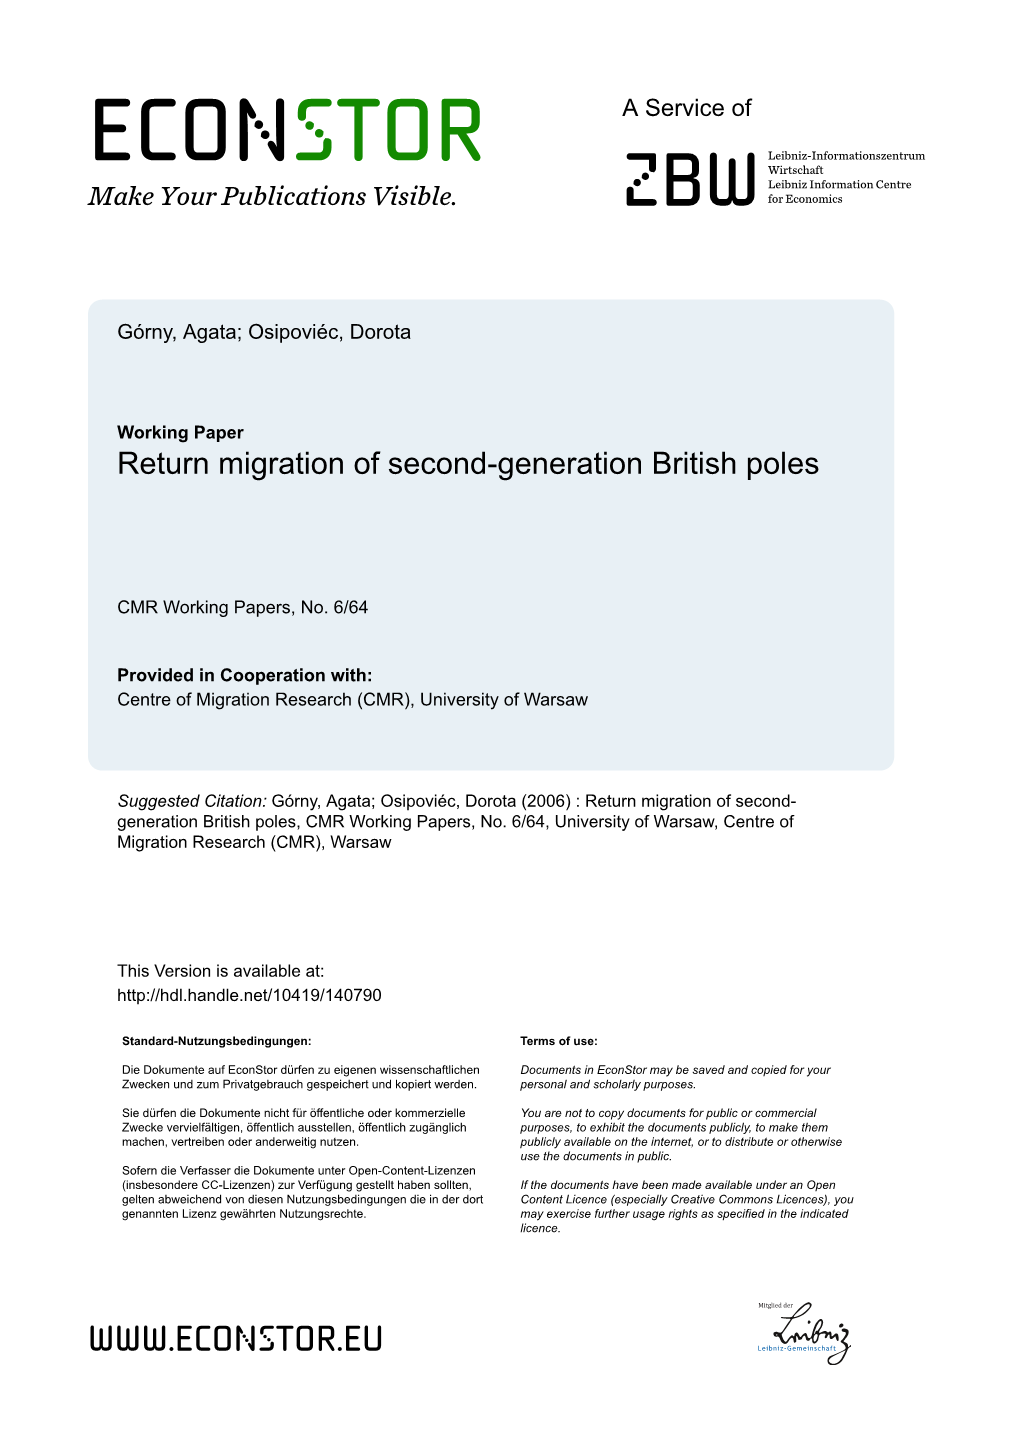 Return Migration of Second-Generation British Poles